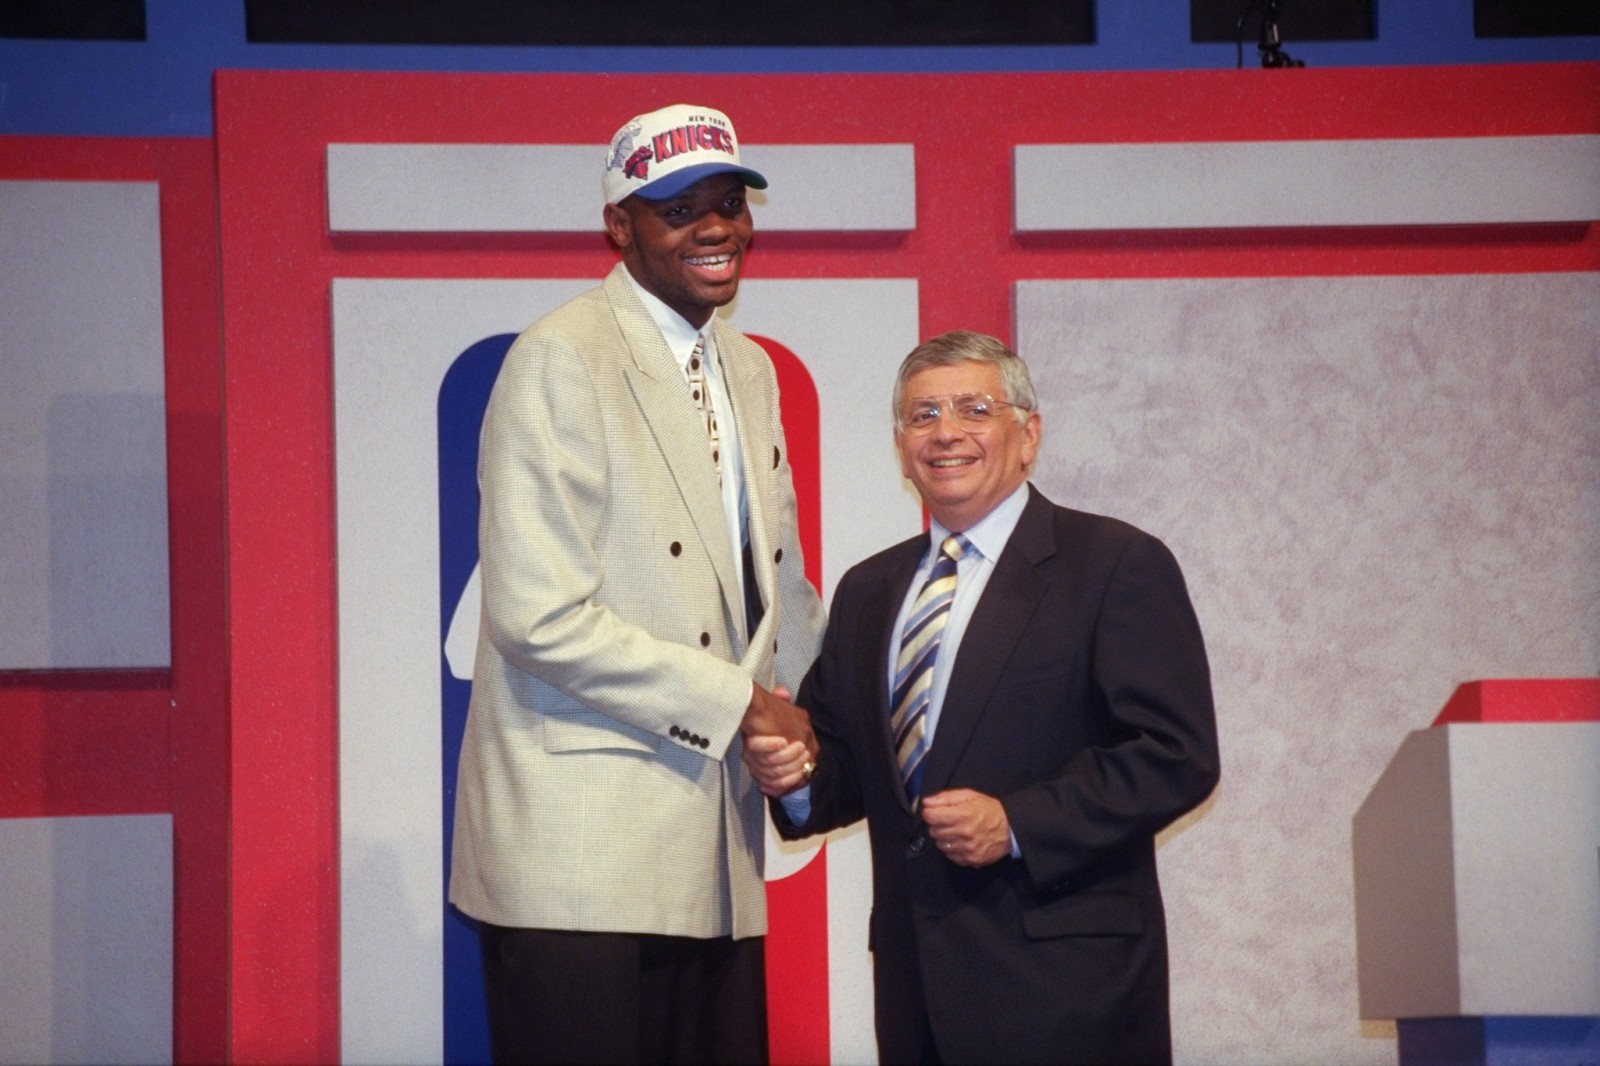 New York Knicks NBA Draft Picks and History: 1996